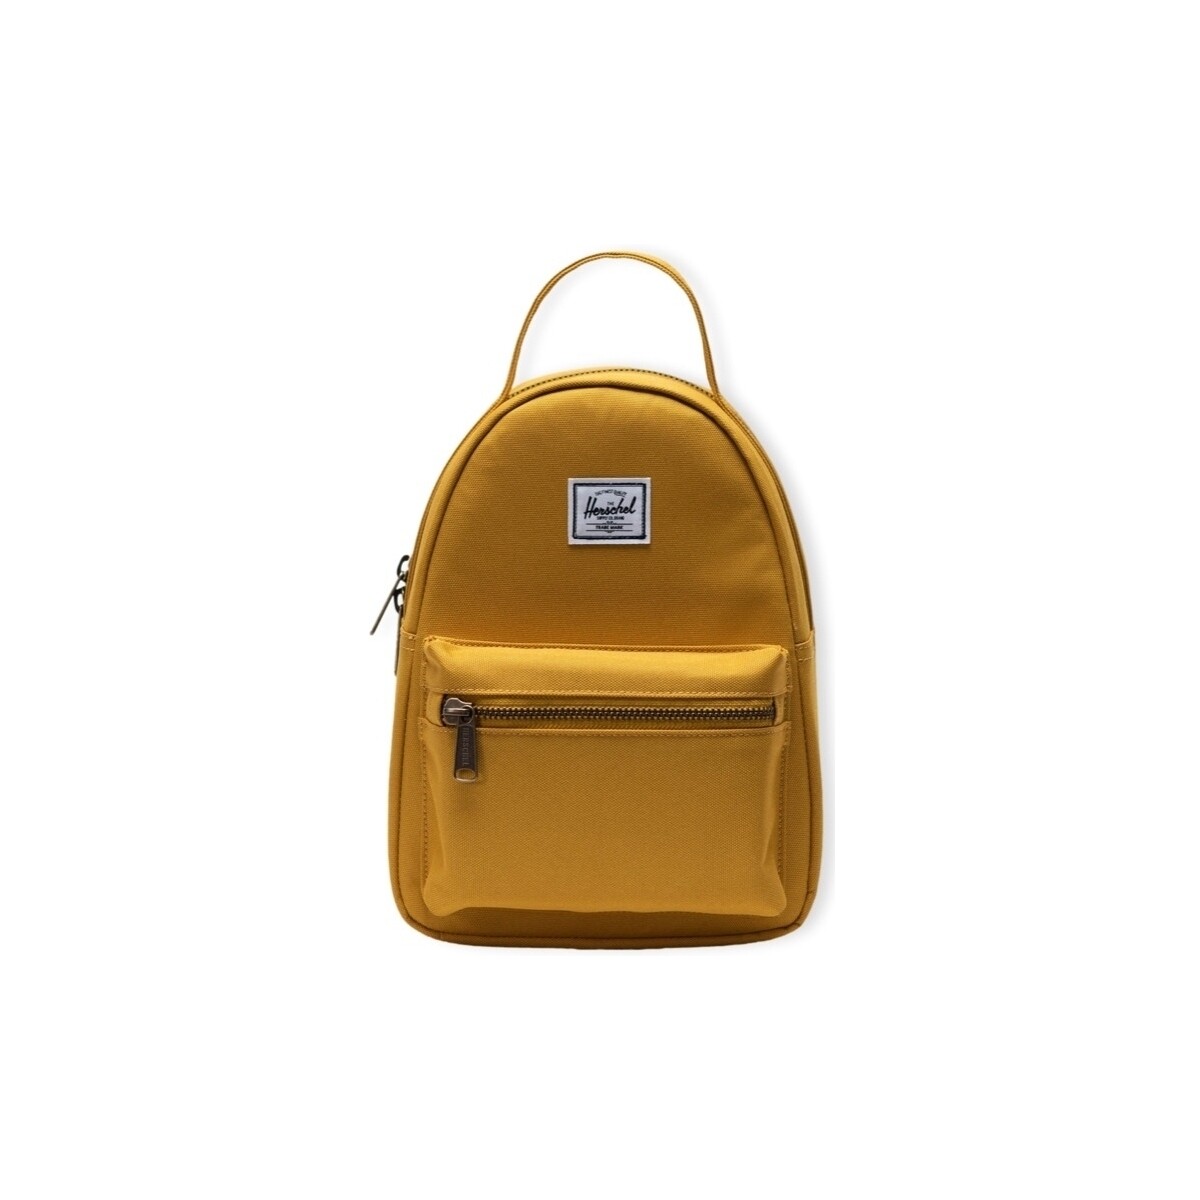 Herschel Jaune Nova Mini Backpack - Arrowwood cGKuYb7M